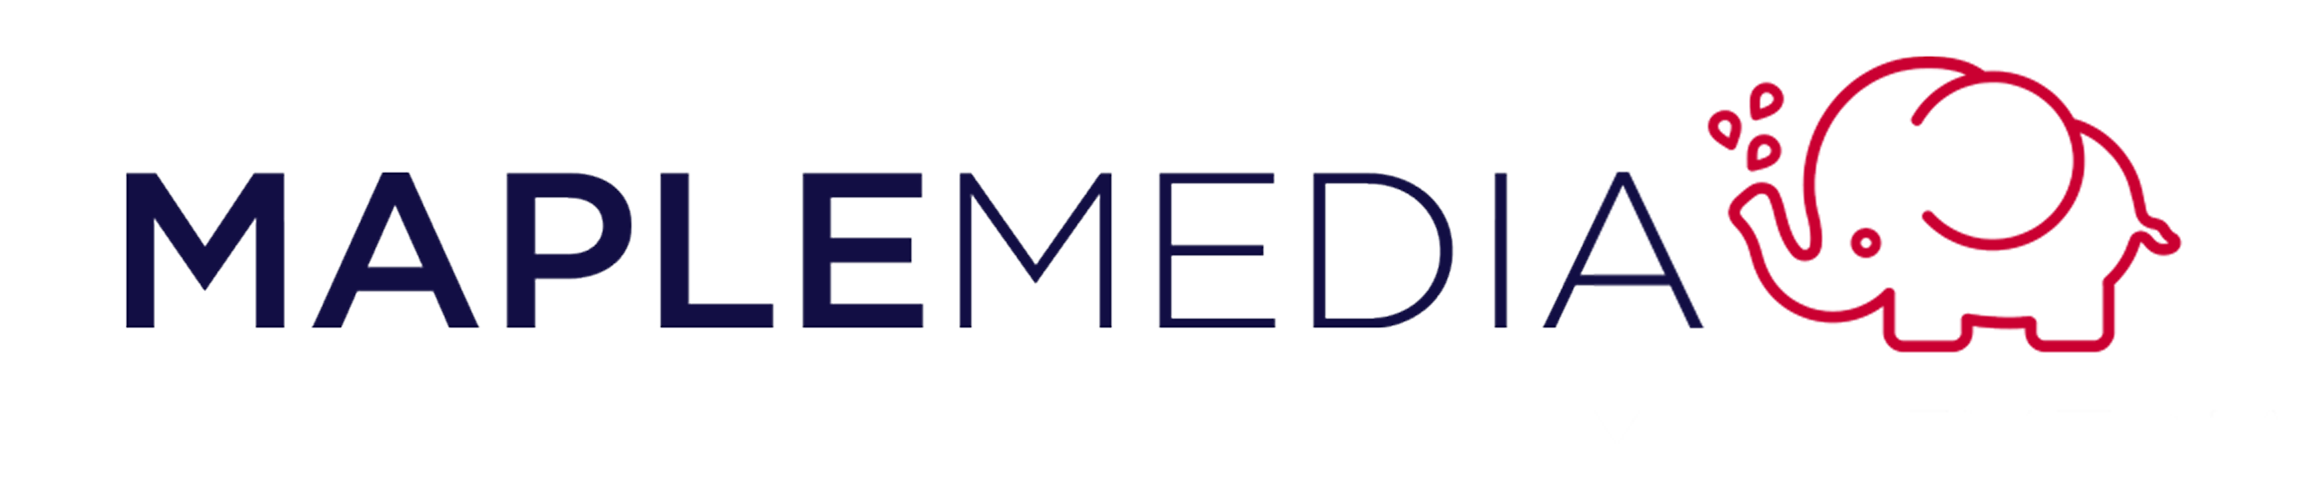 Maple Media Logo